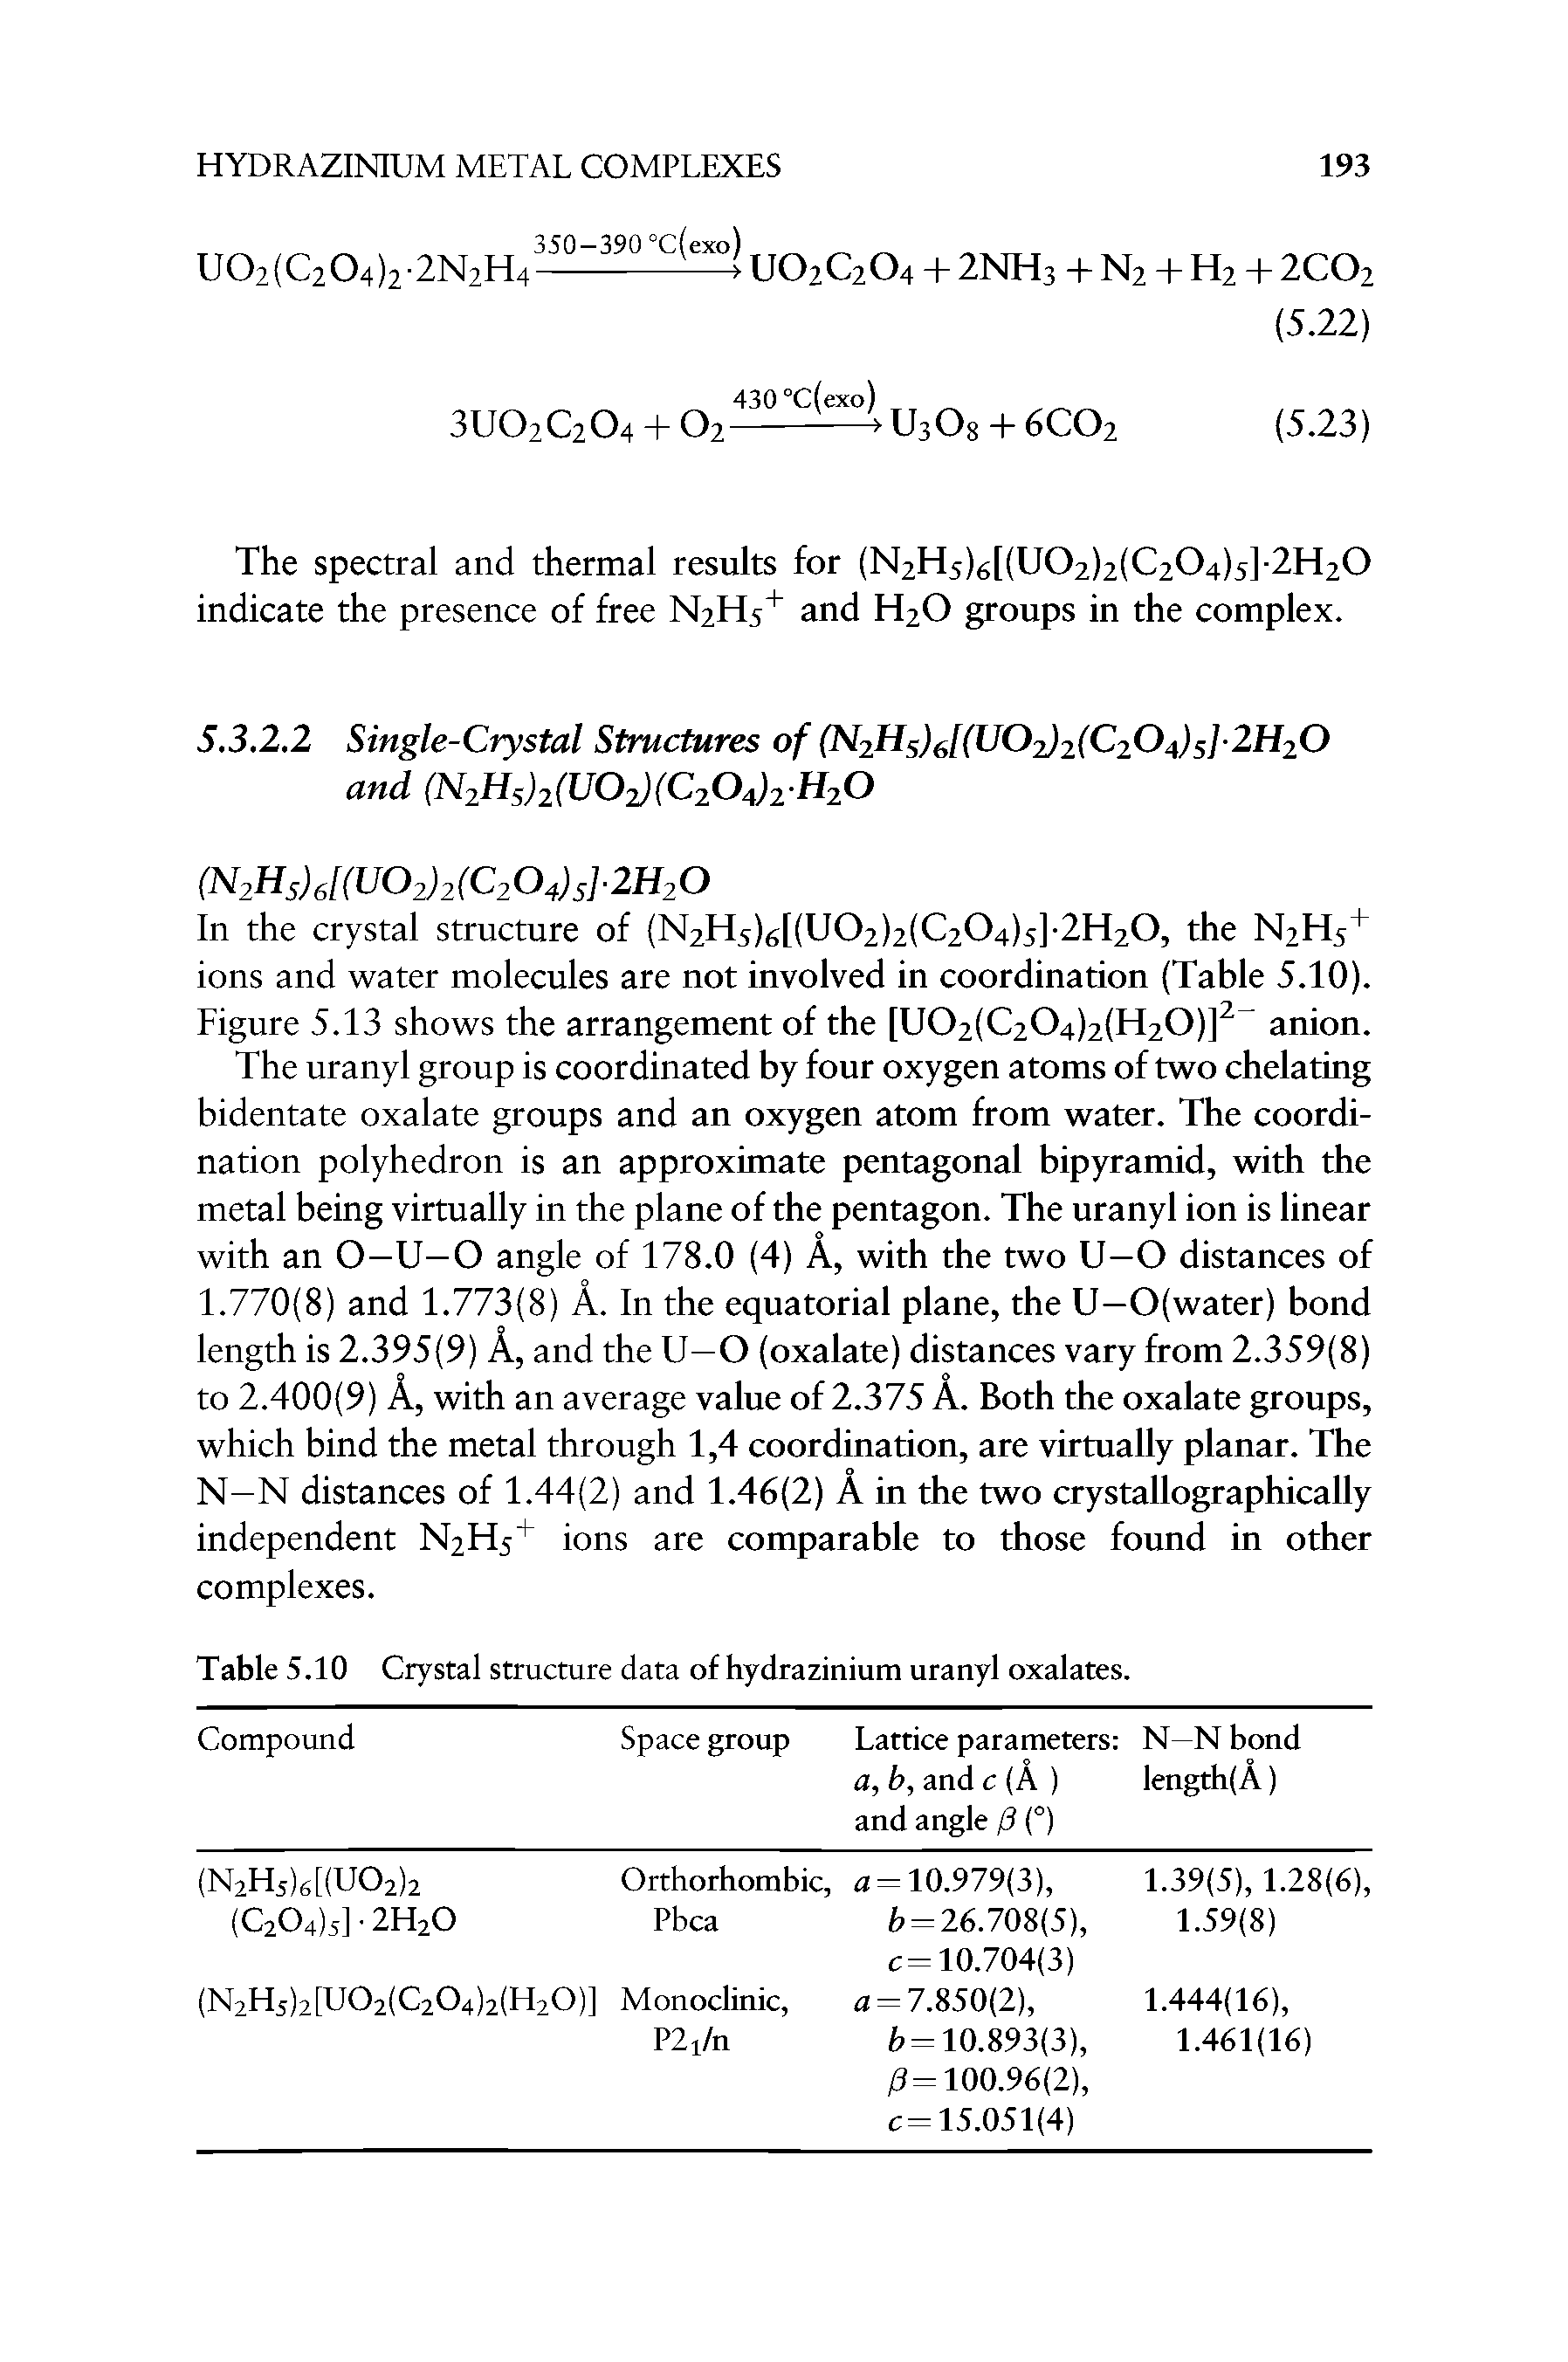 Table 5.10 Crystal structure data of hydrazinium uranyl oxalates.